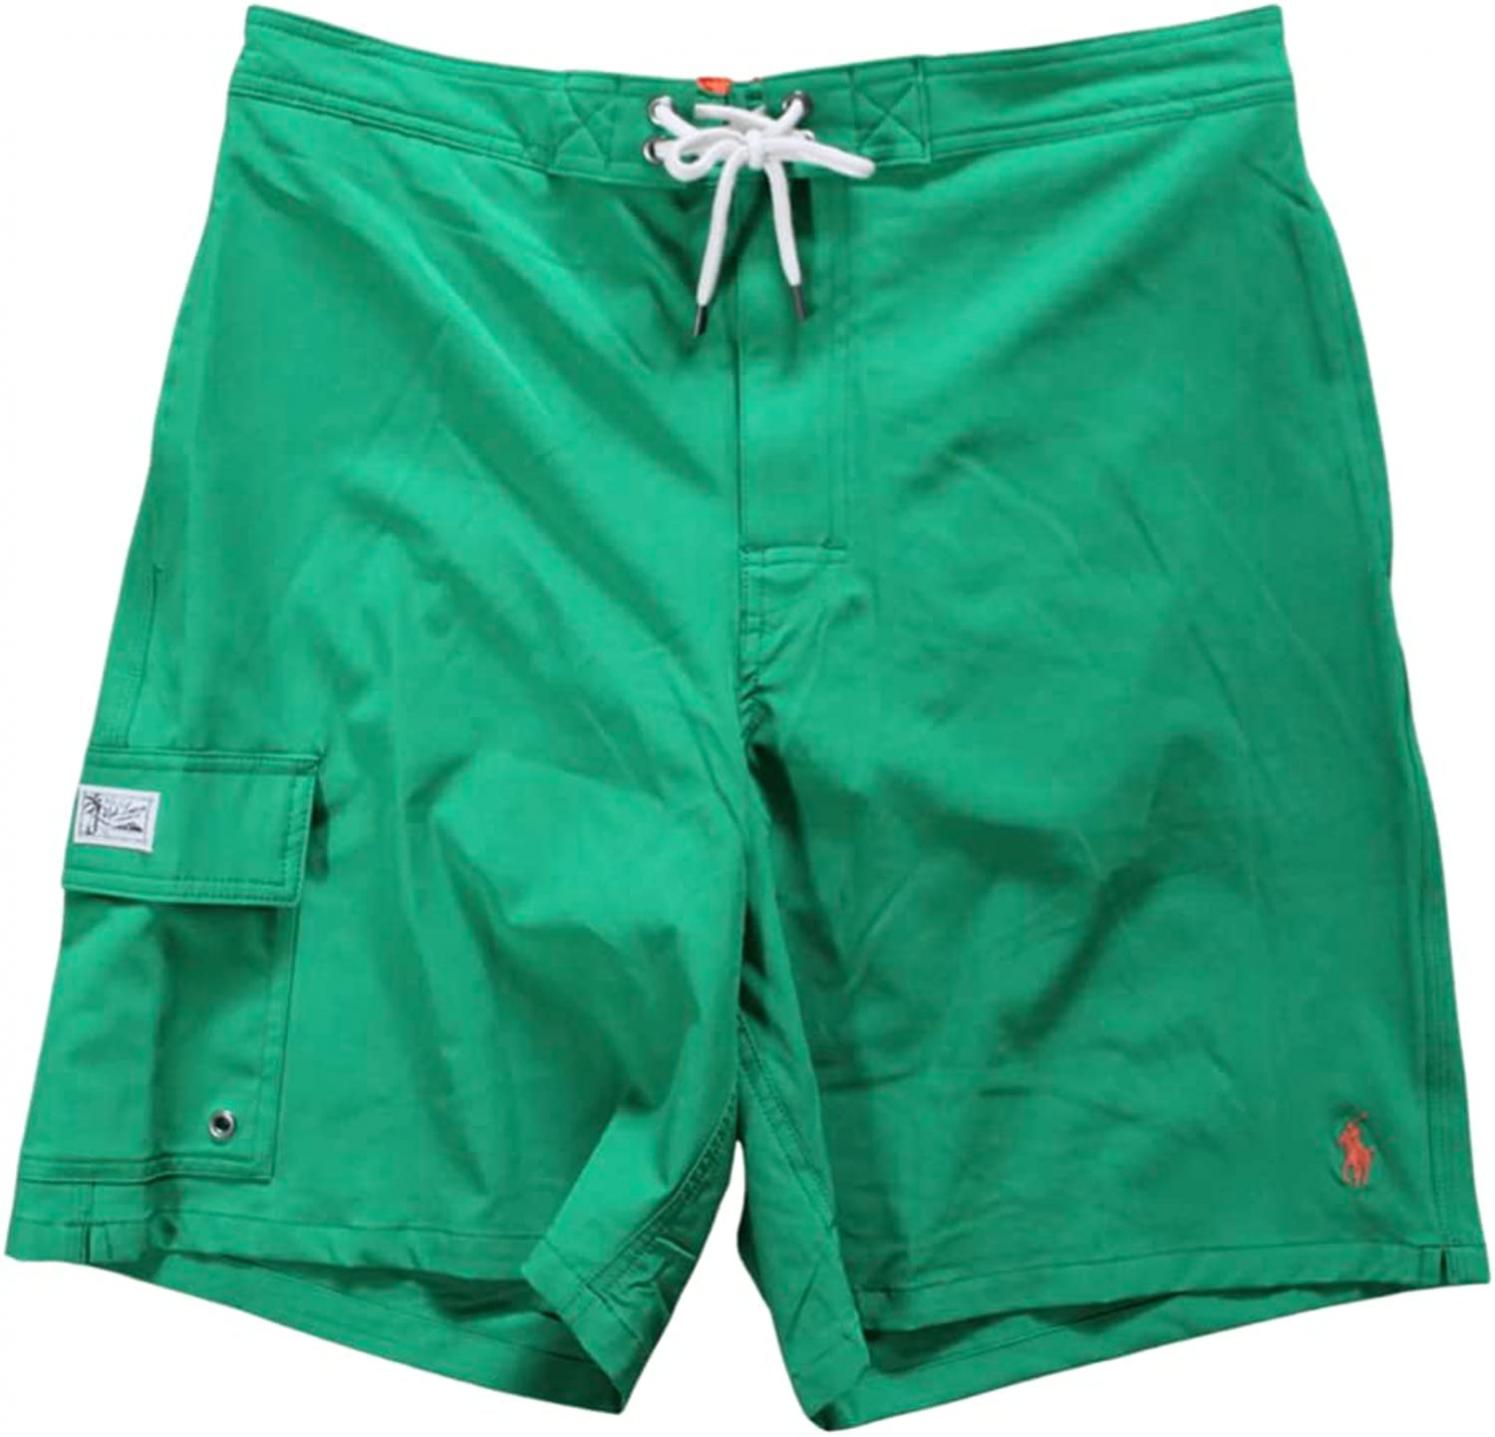 POLO RALPH LAUREN 8.5-Inch Kailua Classic Fit Swim Trunks Size Large Green Shorts